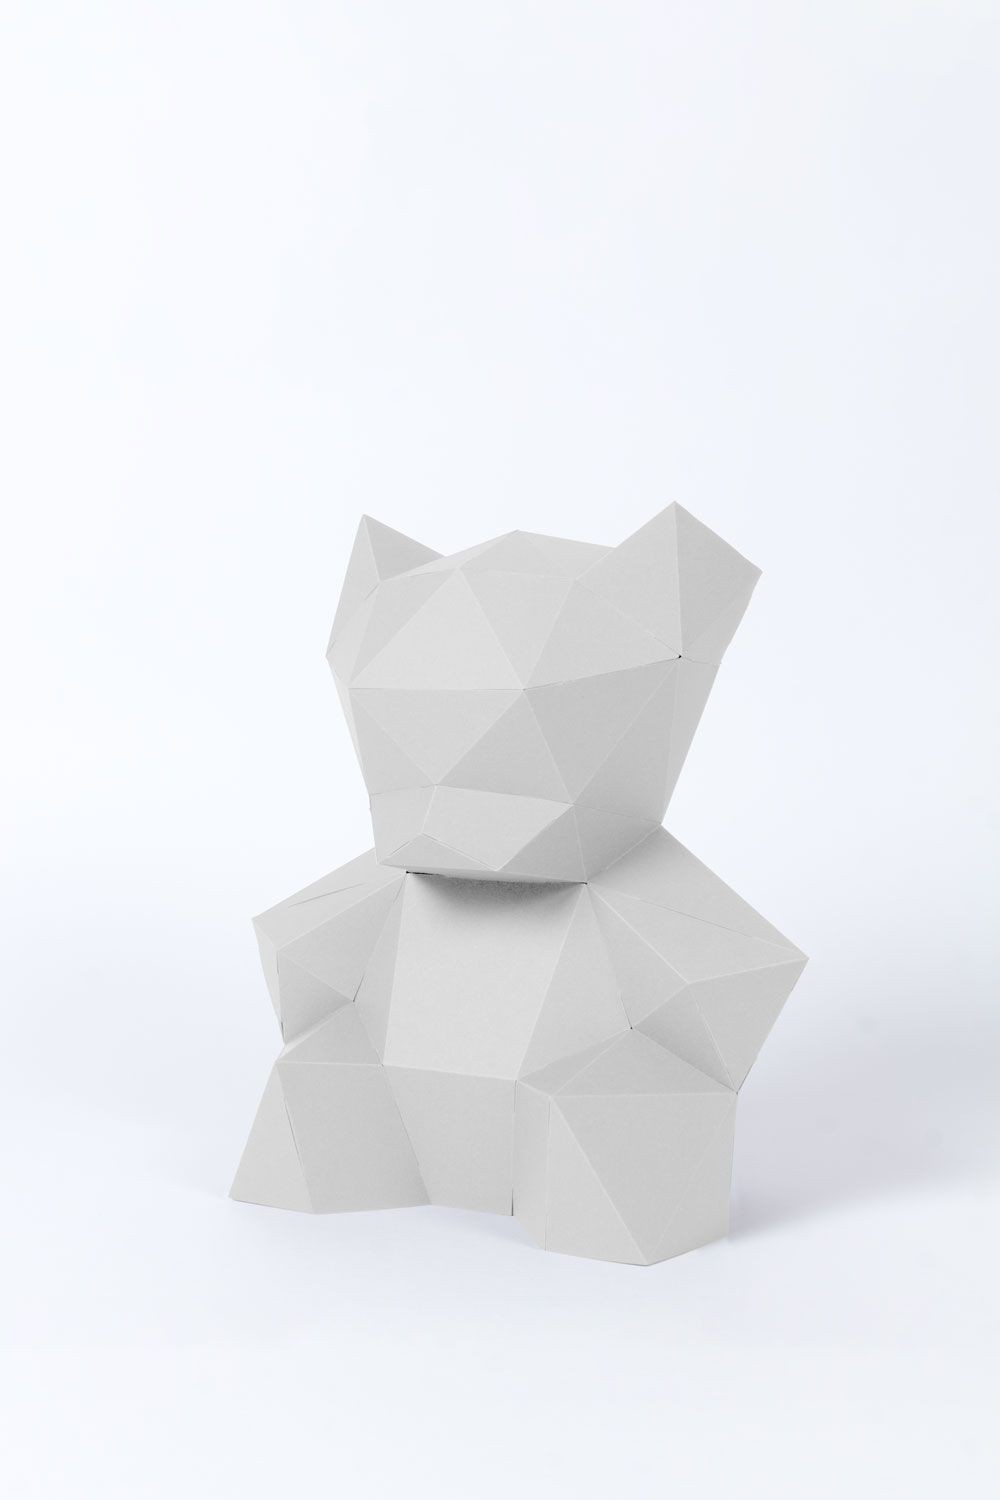 Papercraft Bear 3d Paper Teddy Bear Precut Prefold No Glue